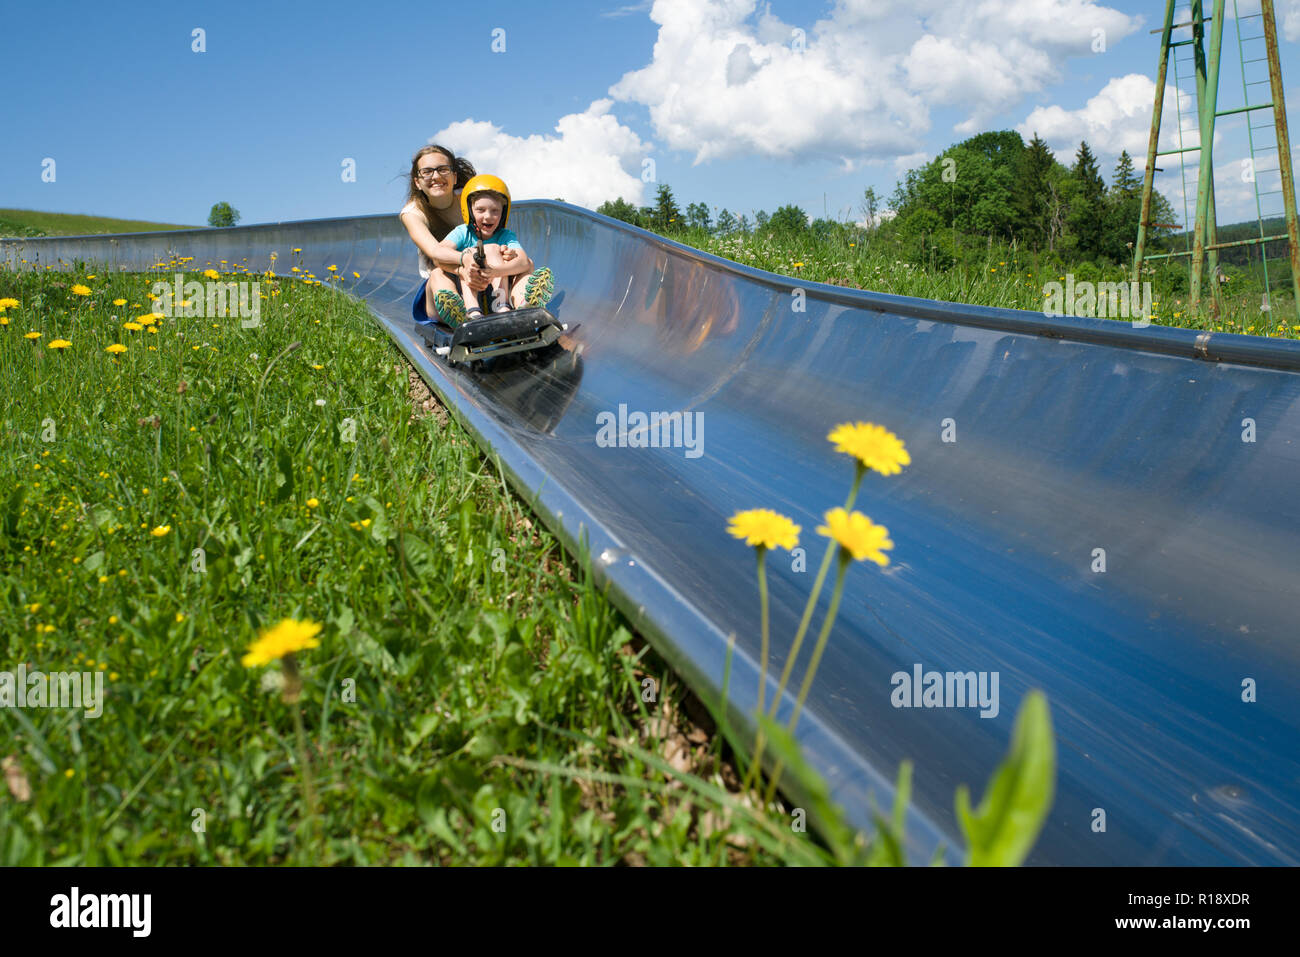 Children in alpine coaster having fun Stock Photo